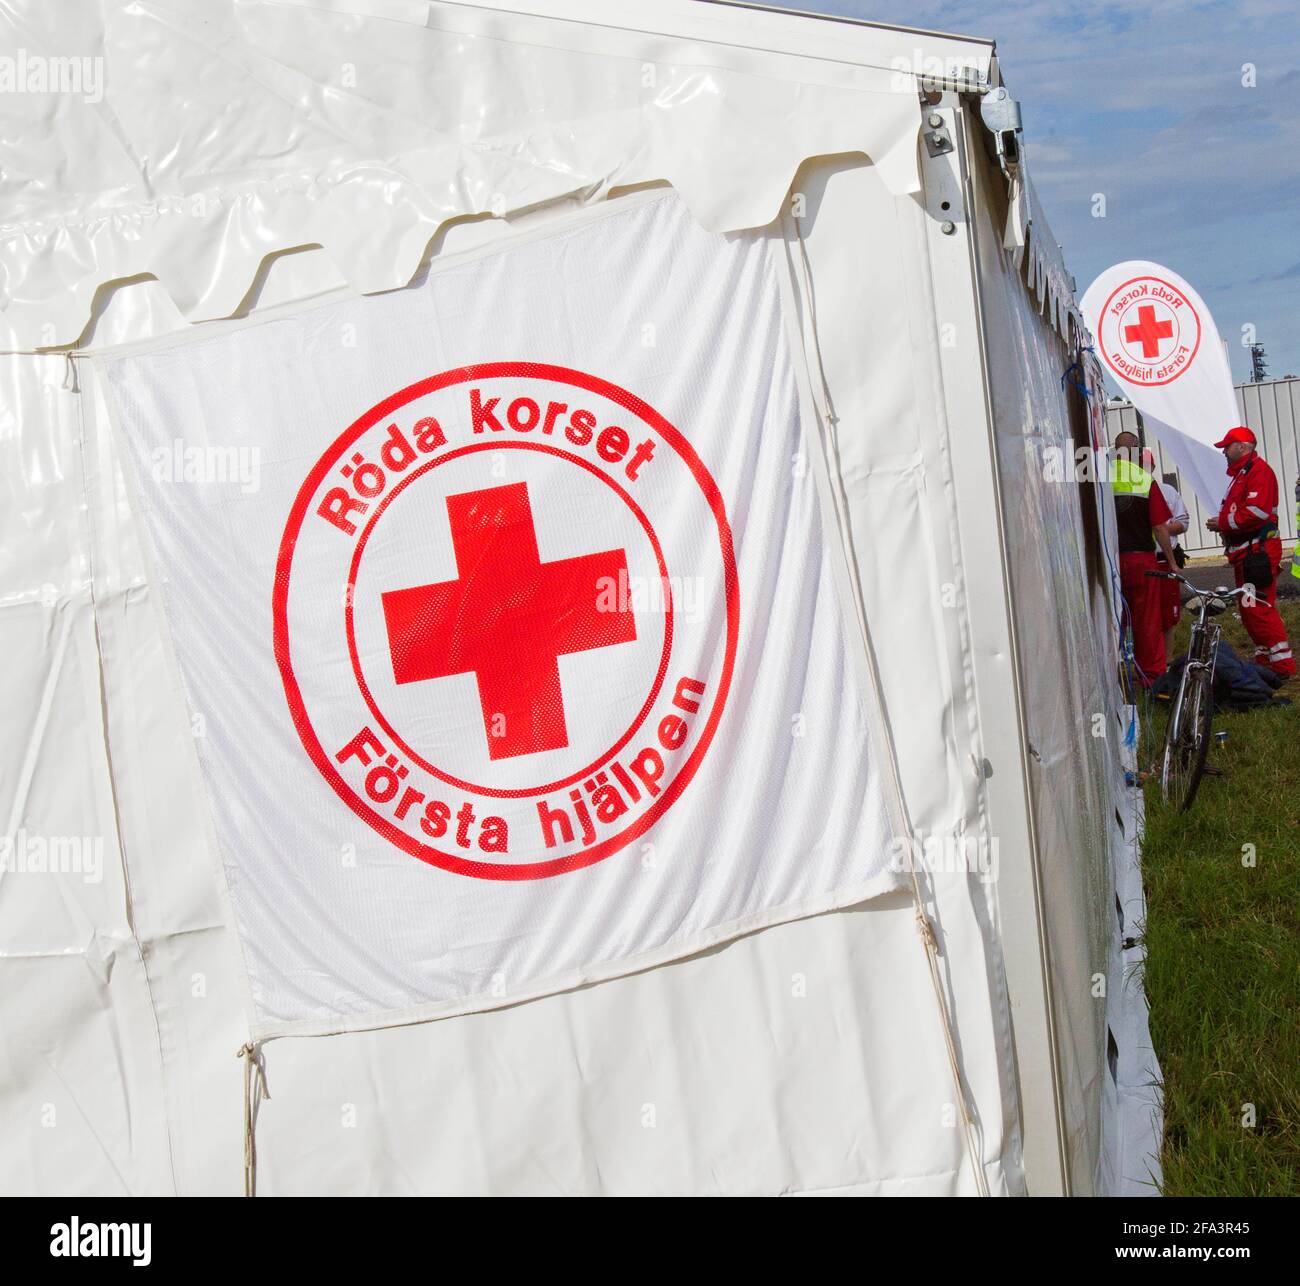 Red cross tent at Bråvalla festival Stock Photo - Alamy